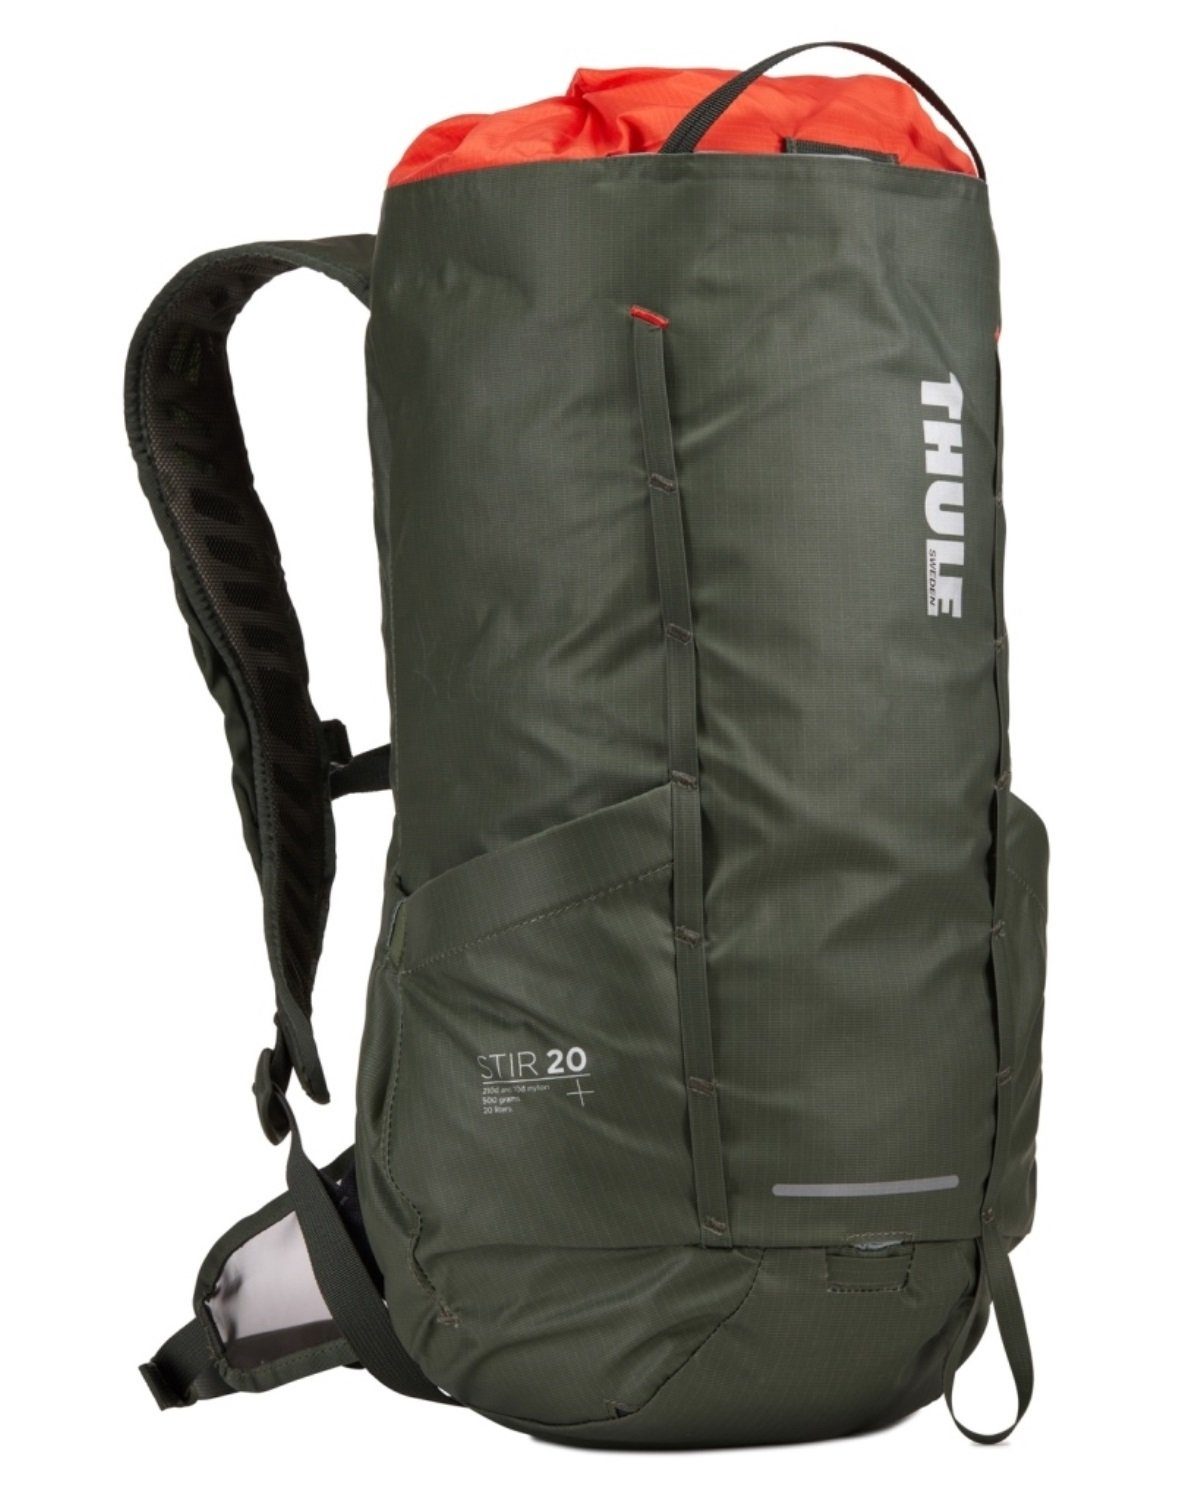 Thule Wanderrucksack Stir 20L Backpack Rucksack Tasche Wander-Rucksack, Tasche am Schultergurt Schlaufenbefestigungspunkt atmungsaktiv